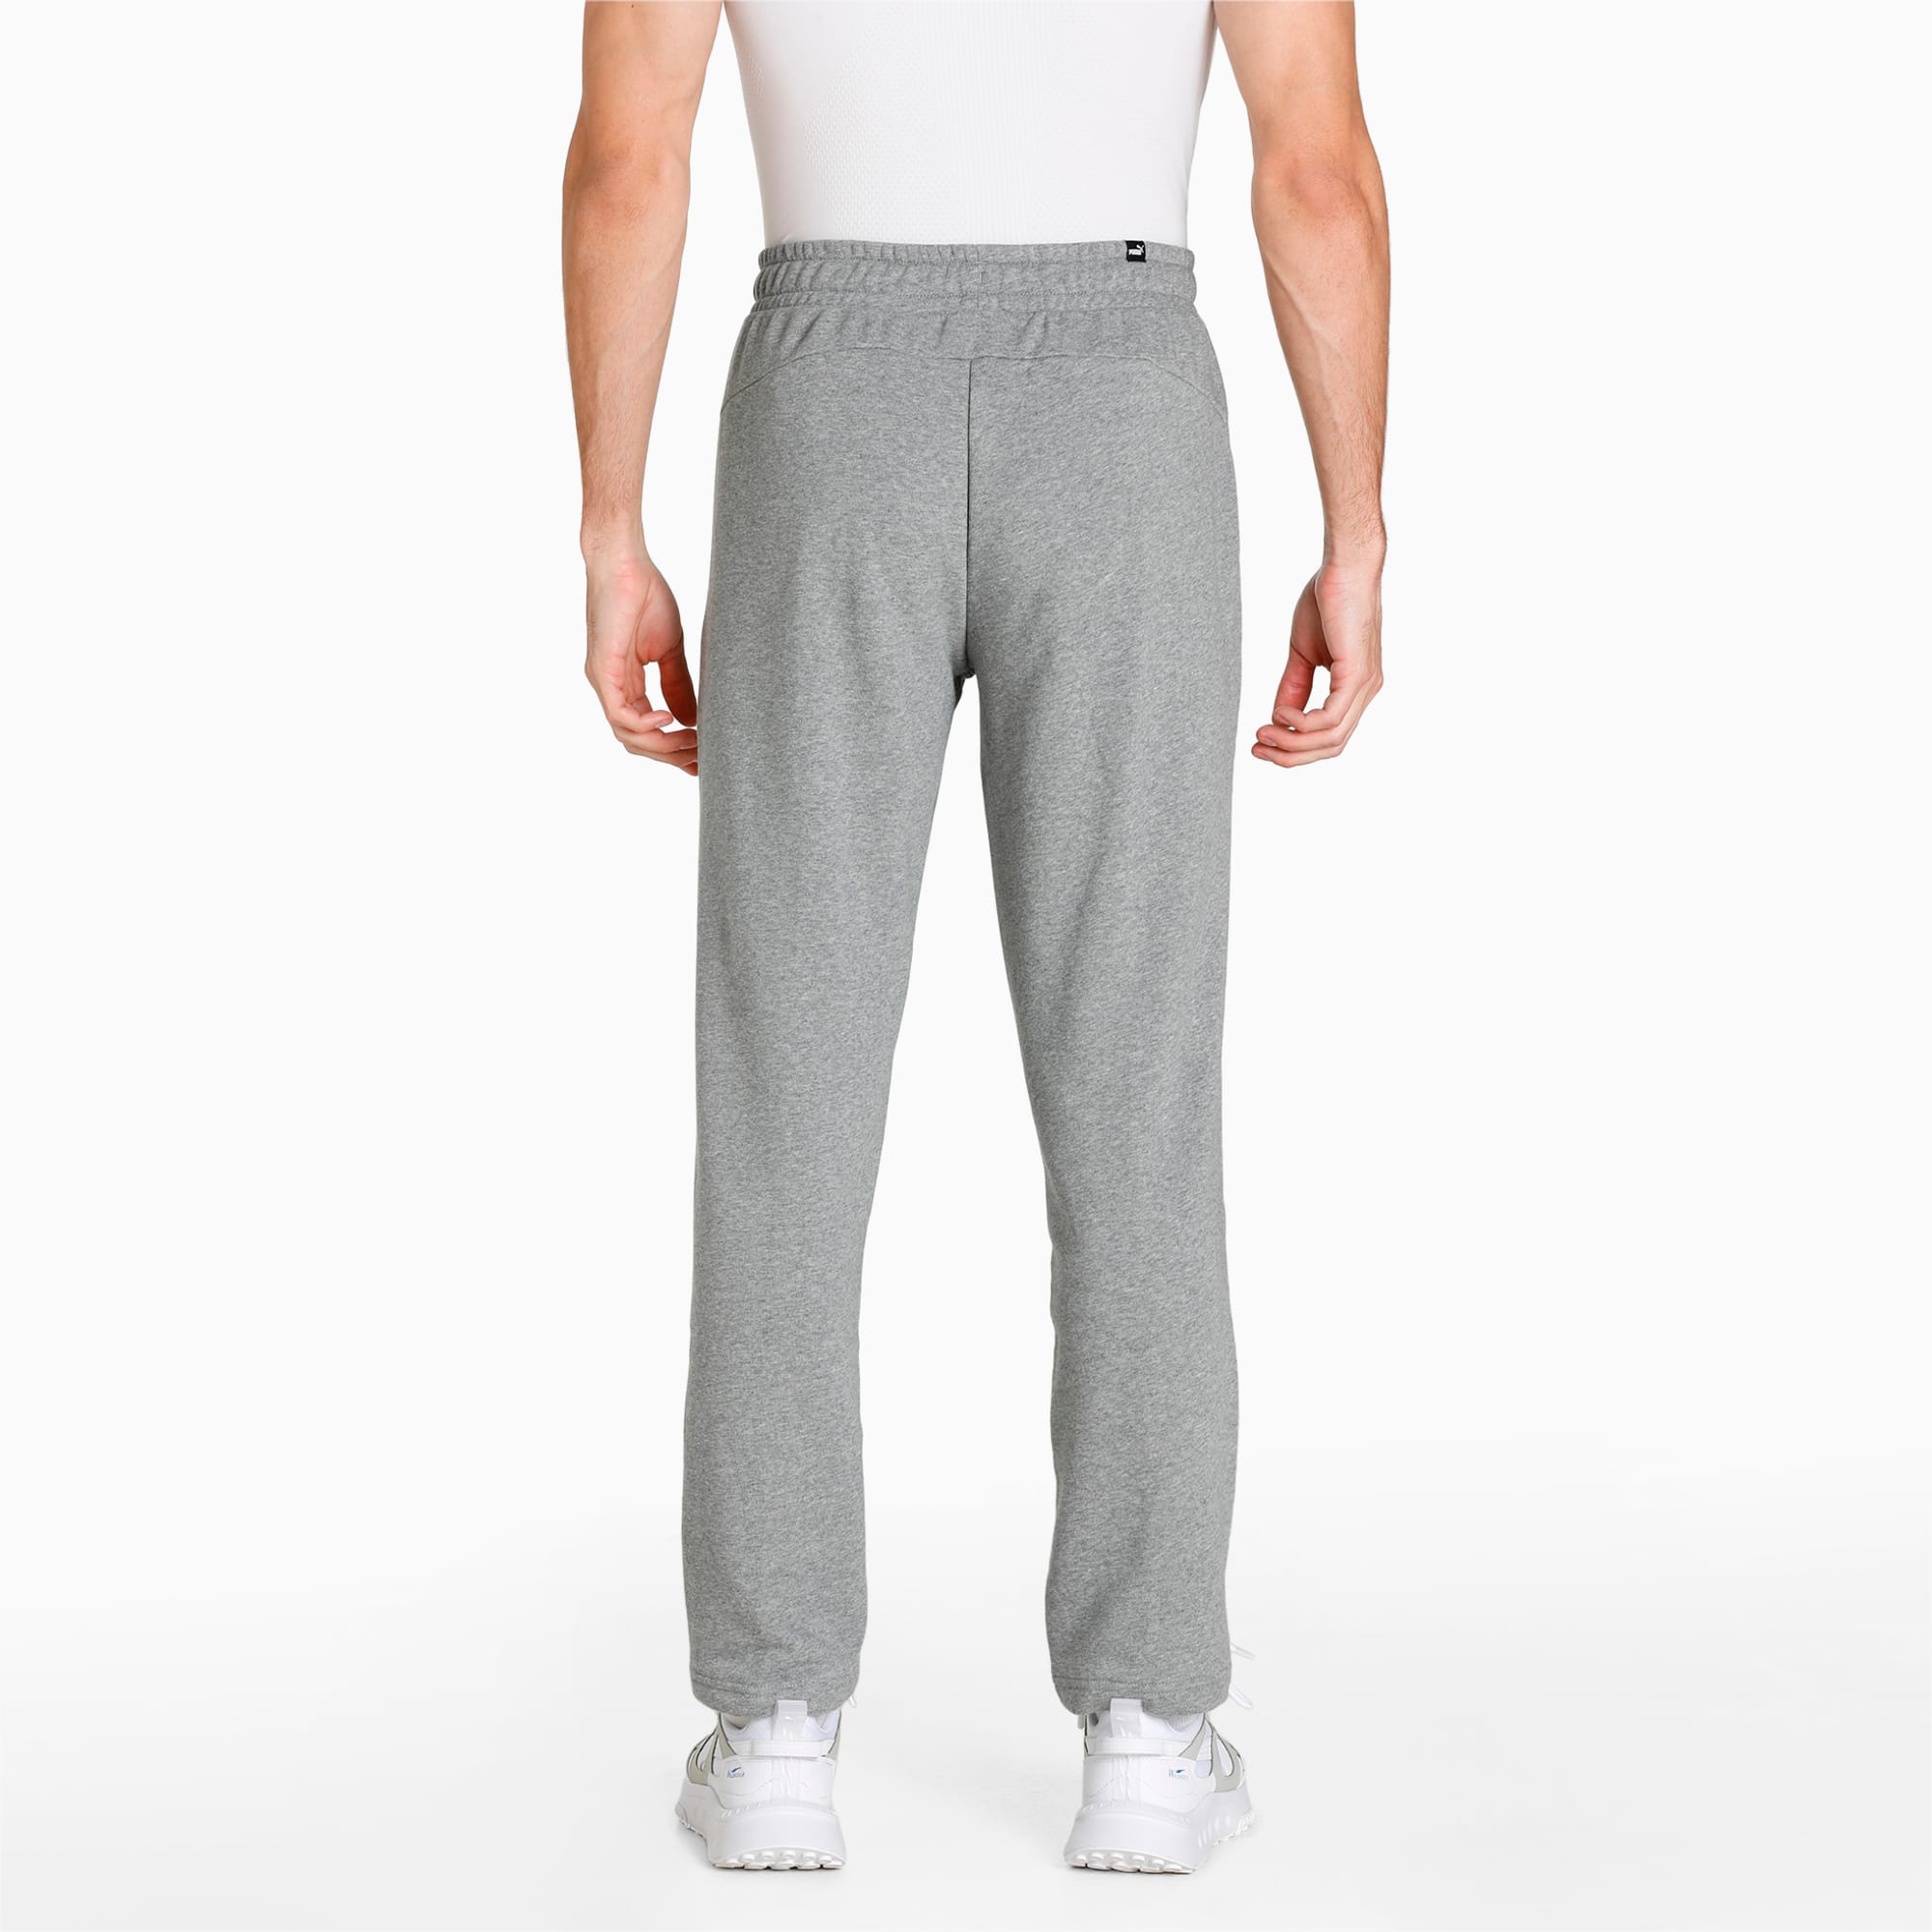 PUMA Essentials Logo Men's Sweatpants, Medium Grey Heather, Clothing